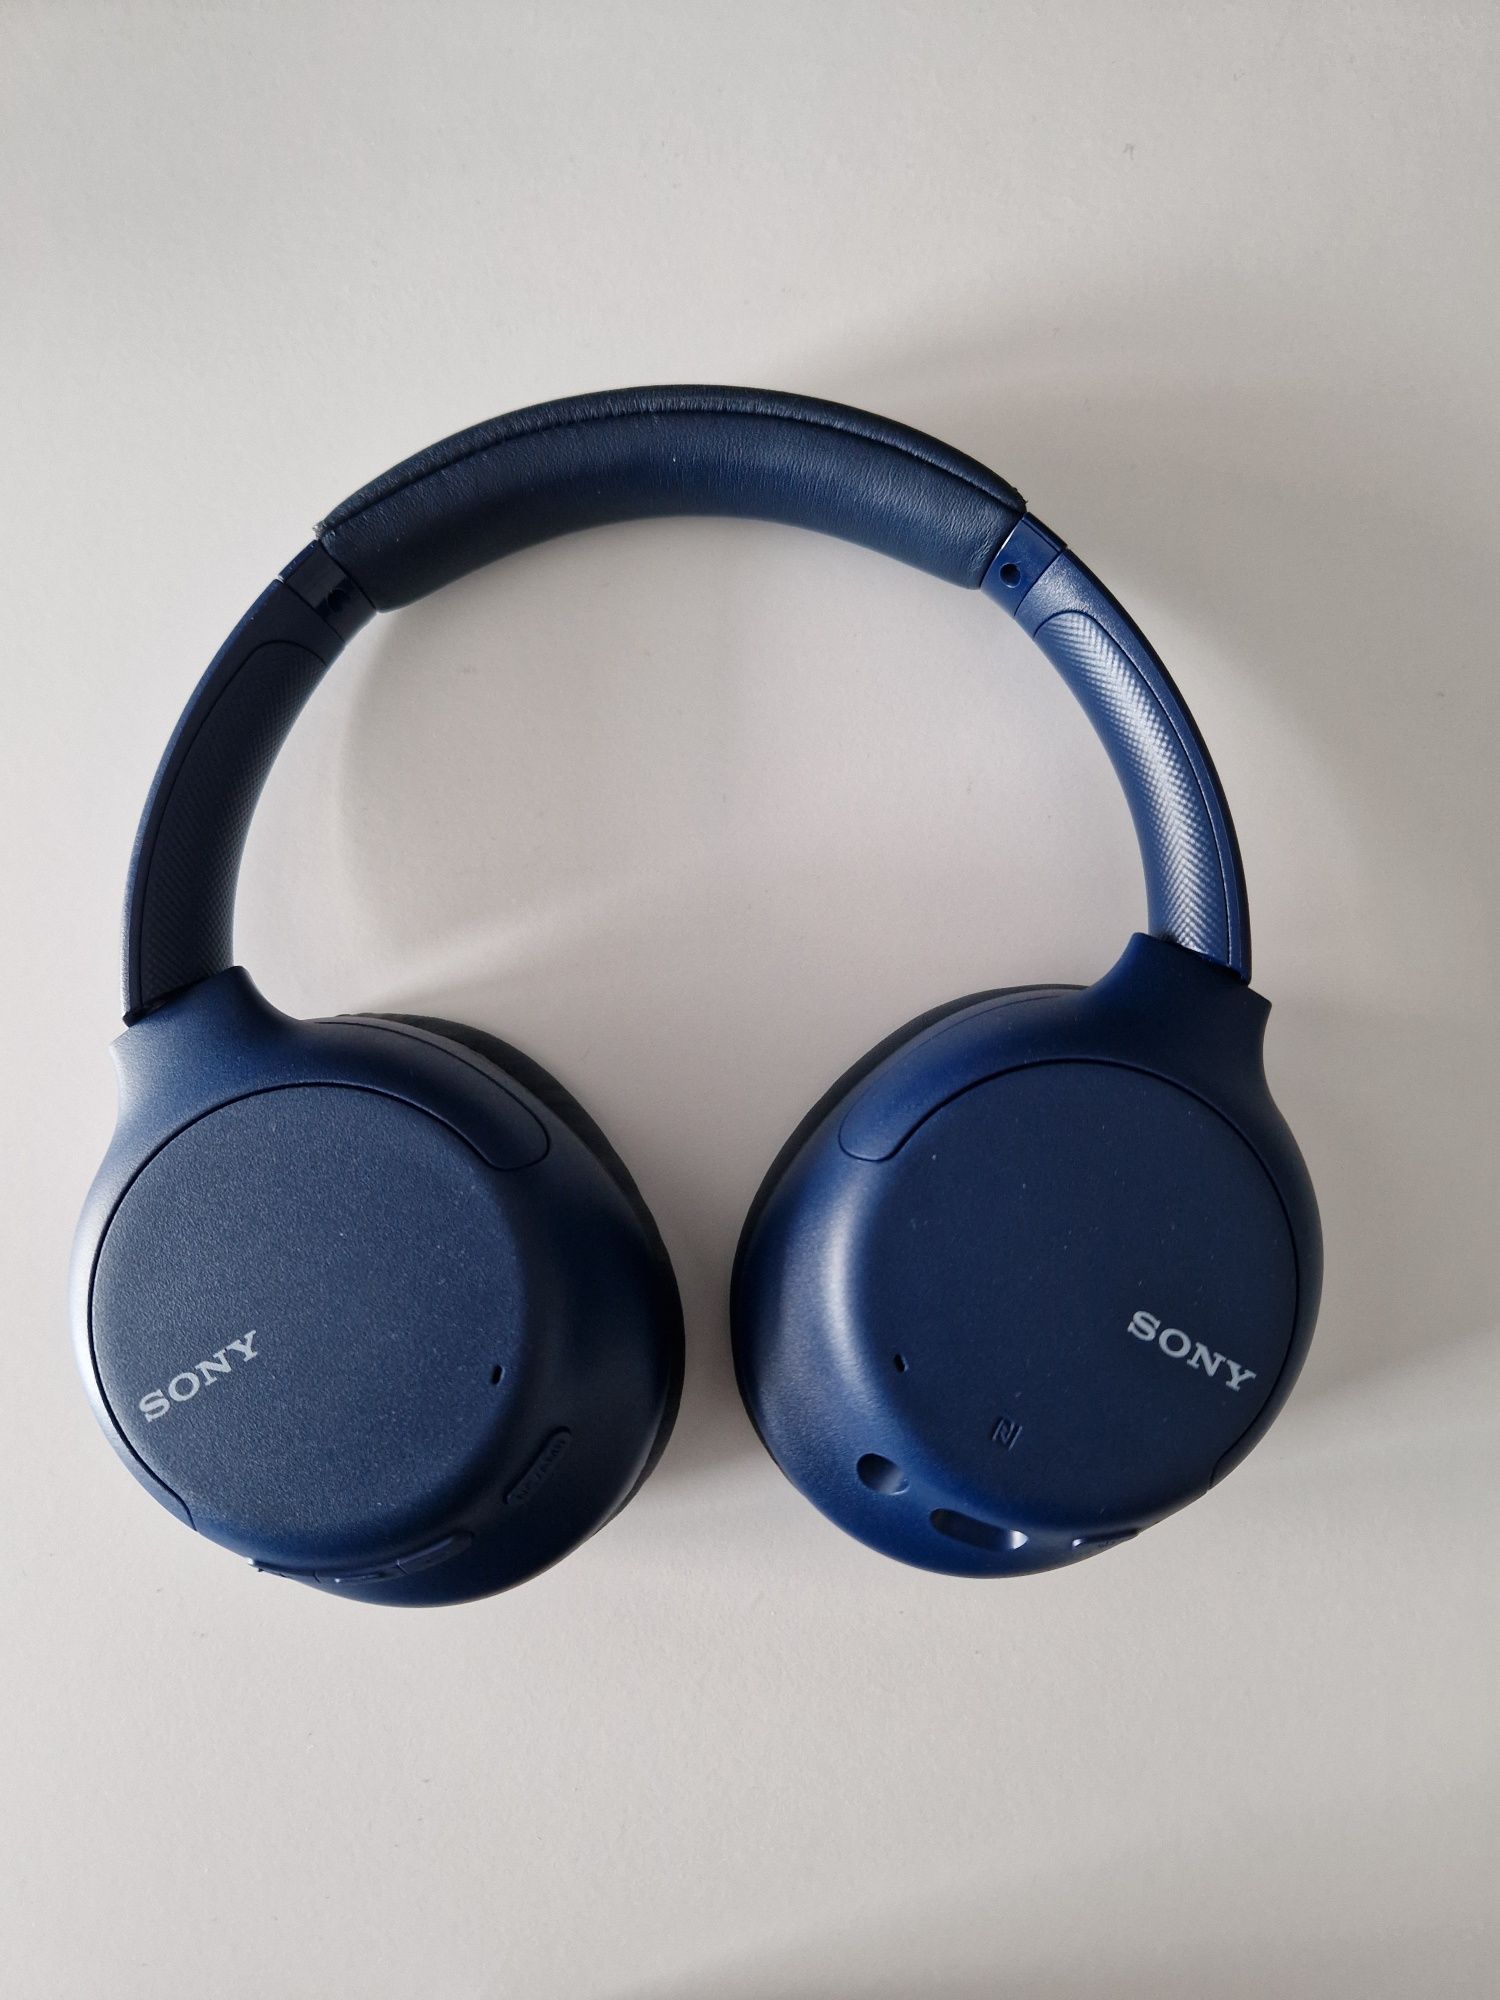 Sony WH-CH710N Headphones